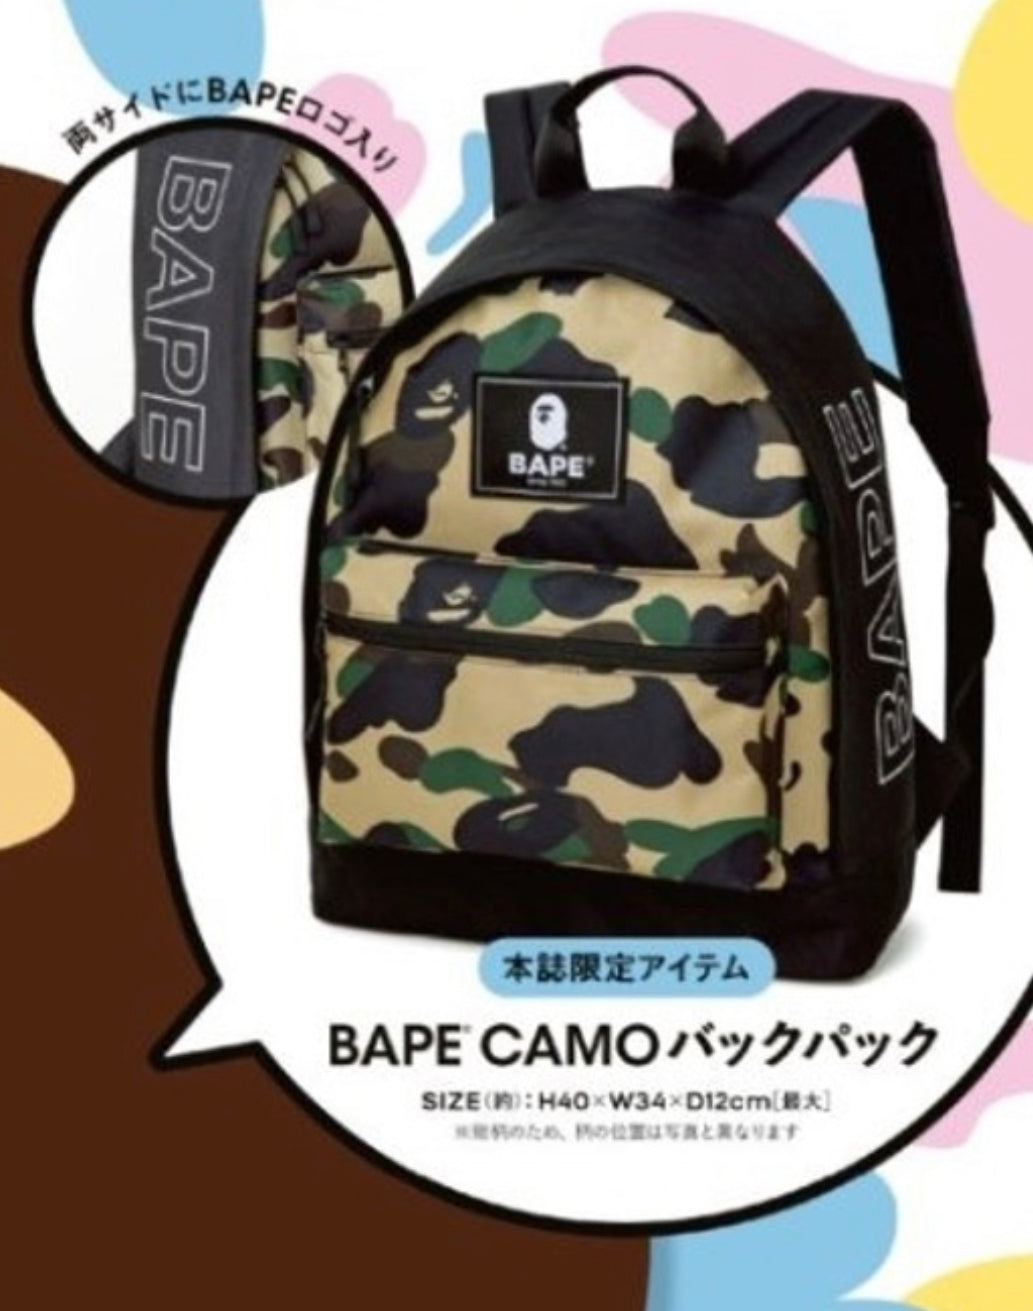 Bape Camo Backpack With Keychain Plush Brand New $100